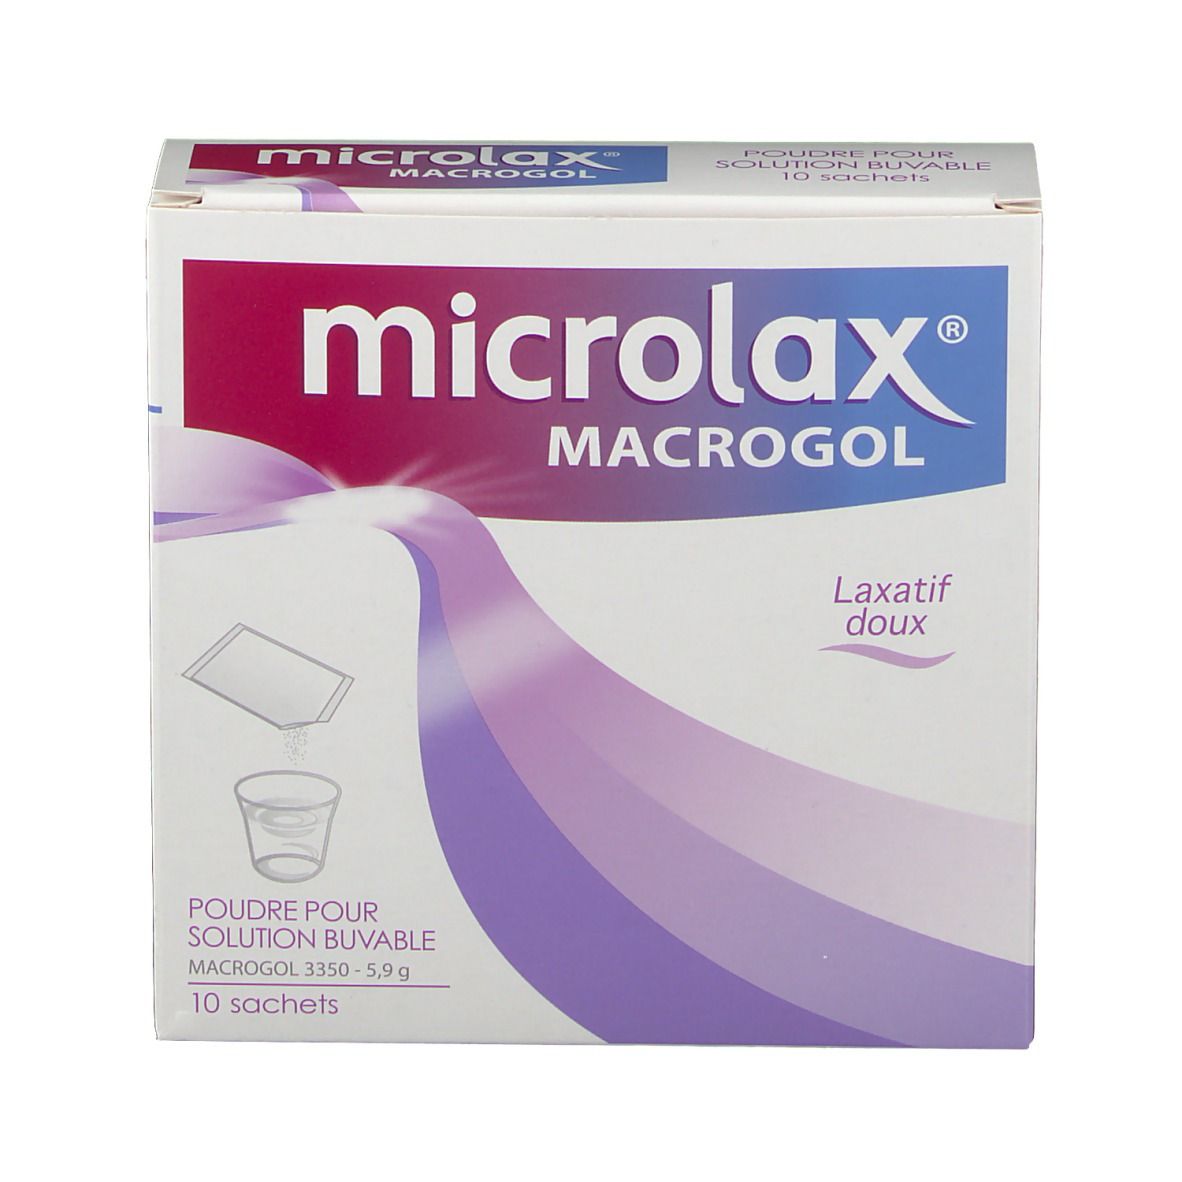 Microlax macrogol